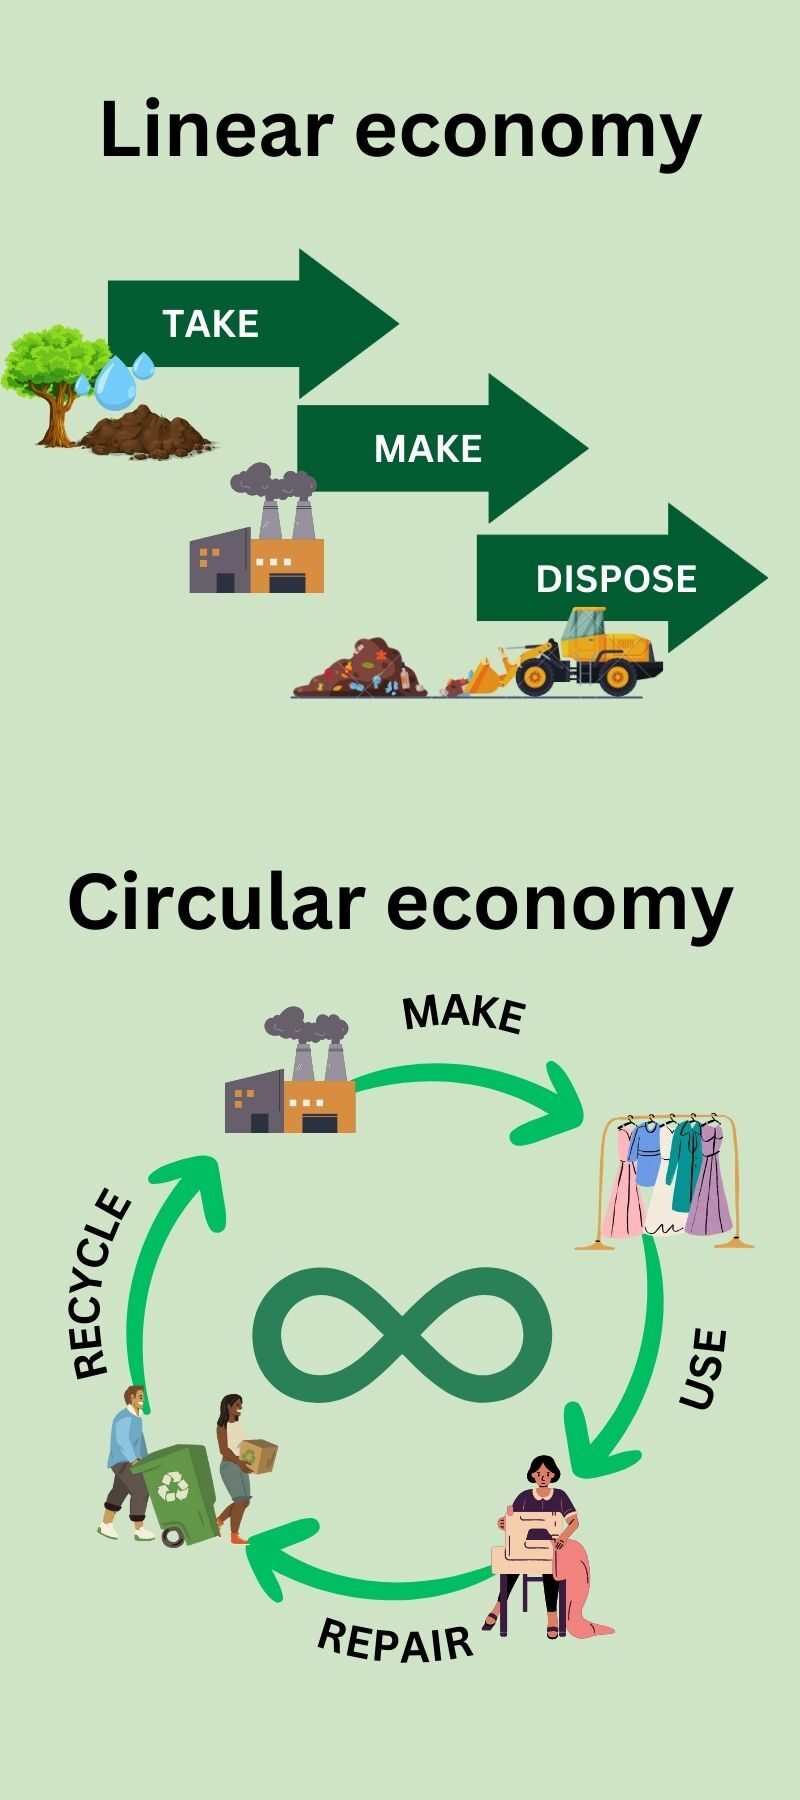 Circular economy - make waste circular economy - make waste circular economy - make waste circular economy - make waste circular economy - make waste.